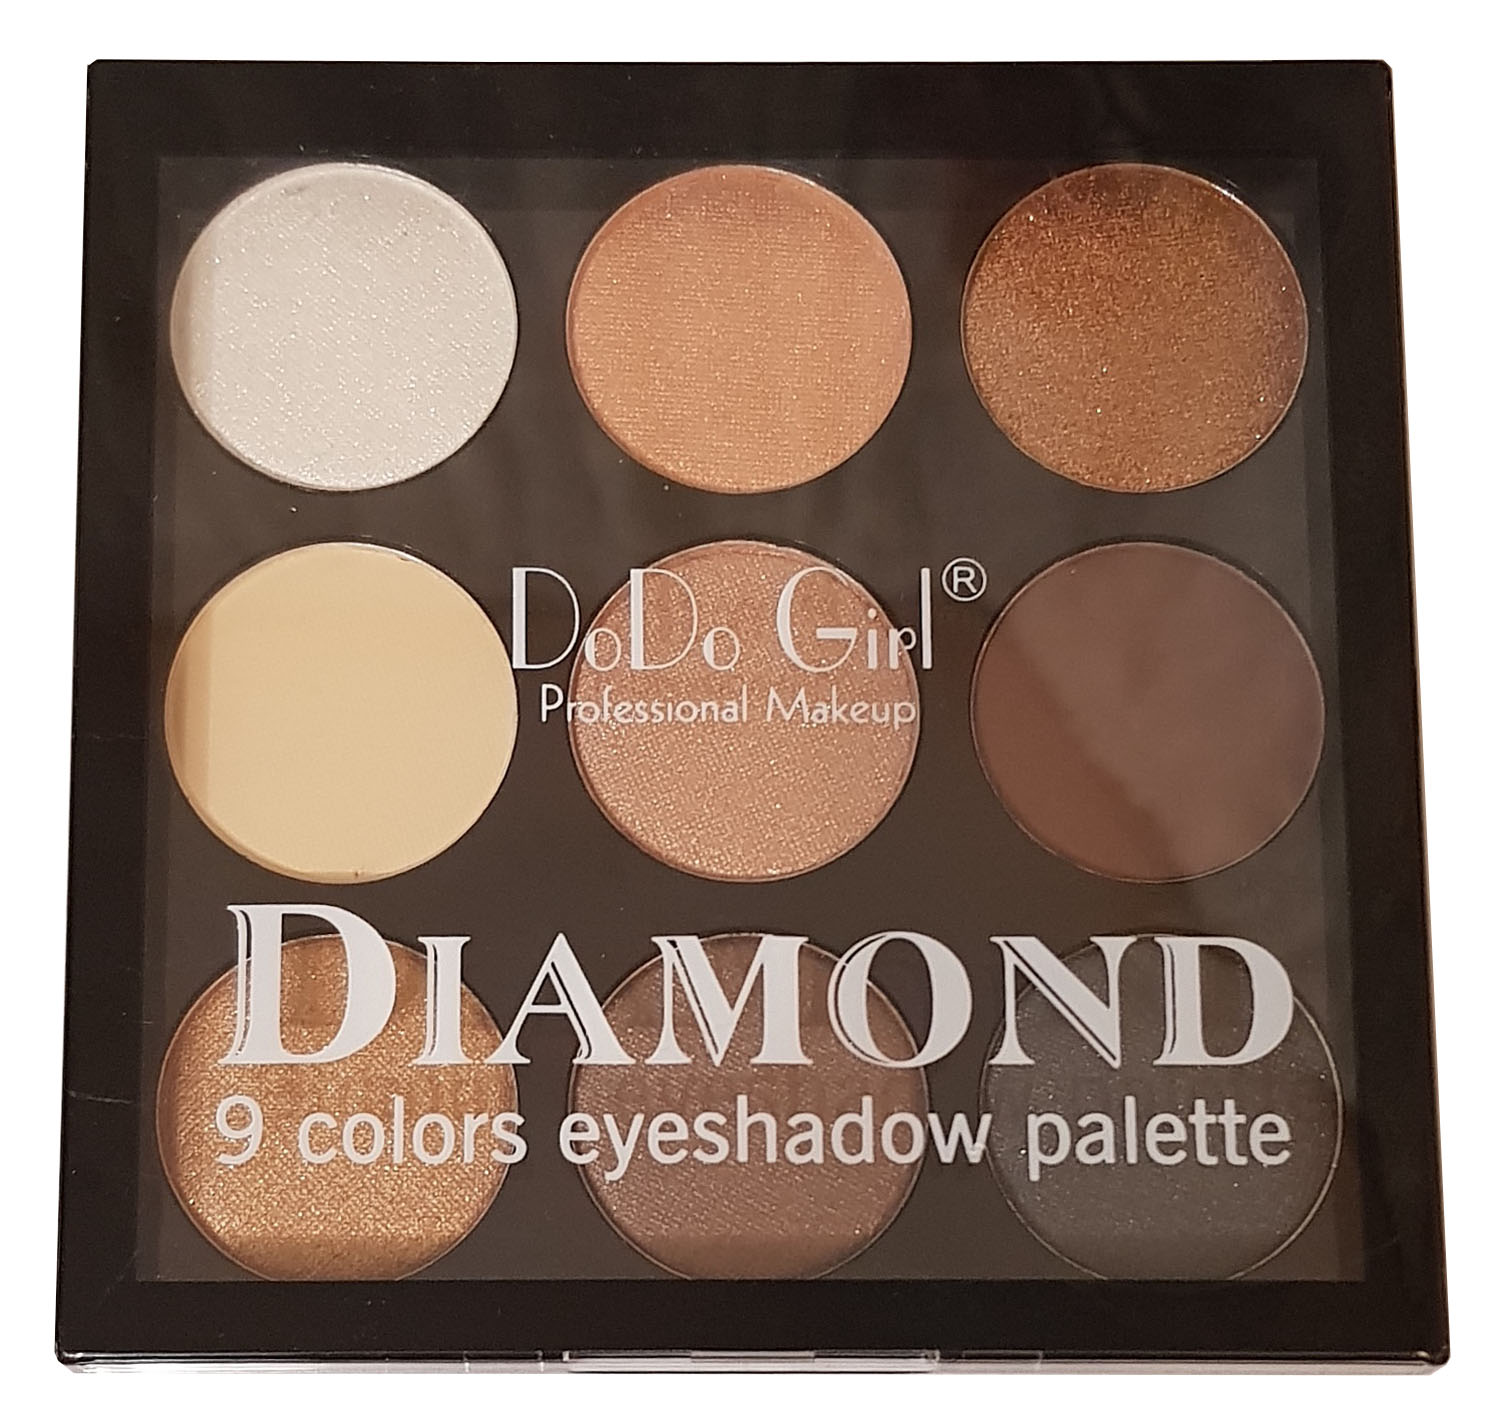 Палетка теней для глаз DoDo Girl Diamond Eyeshadow Palette, 9 оттенков, набор 03 babor палетка из 4 оттенков теней для век тон 04 день